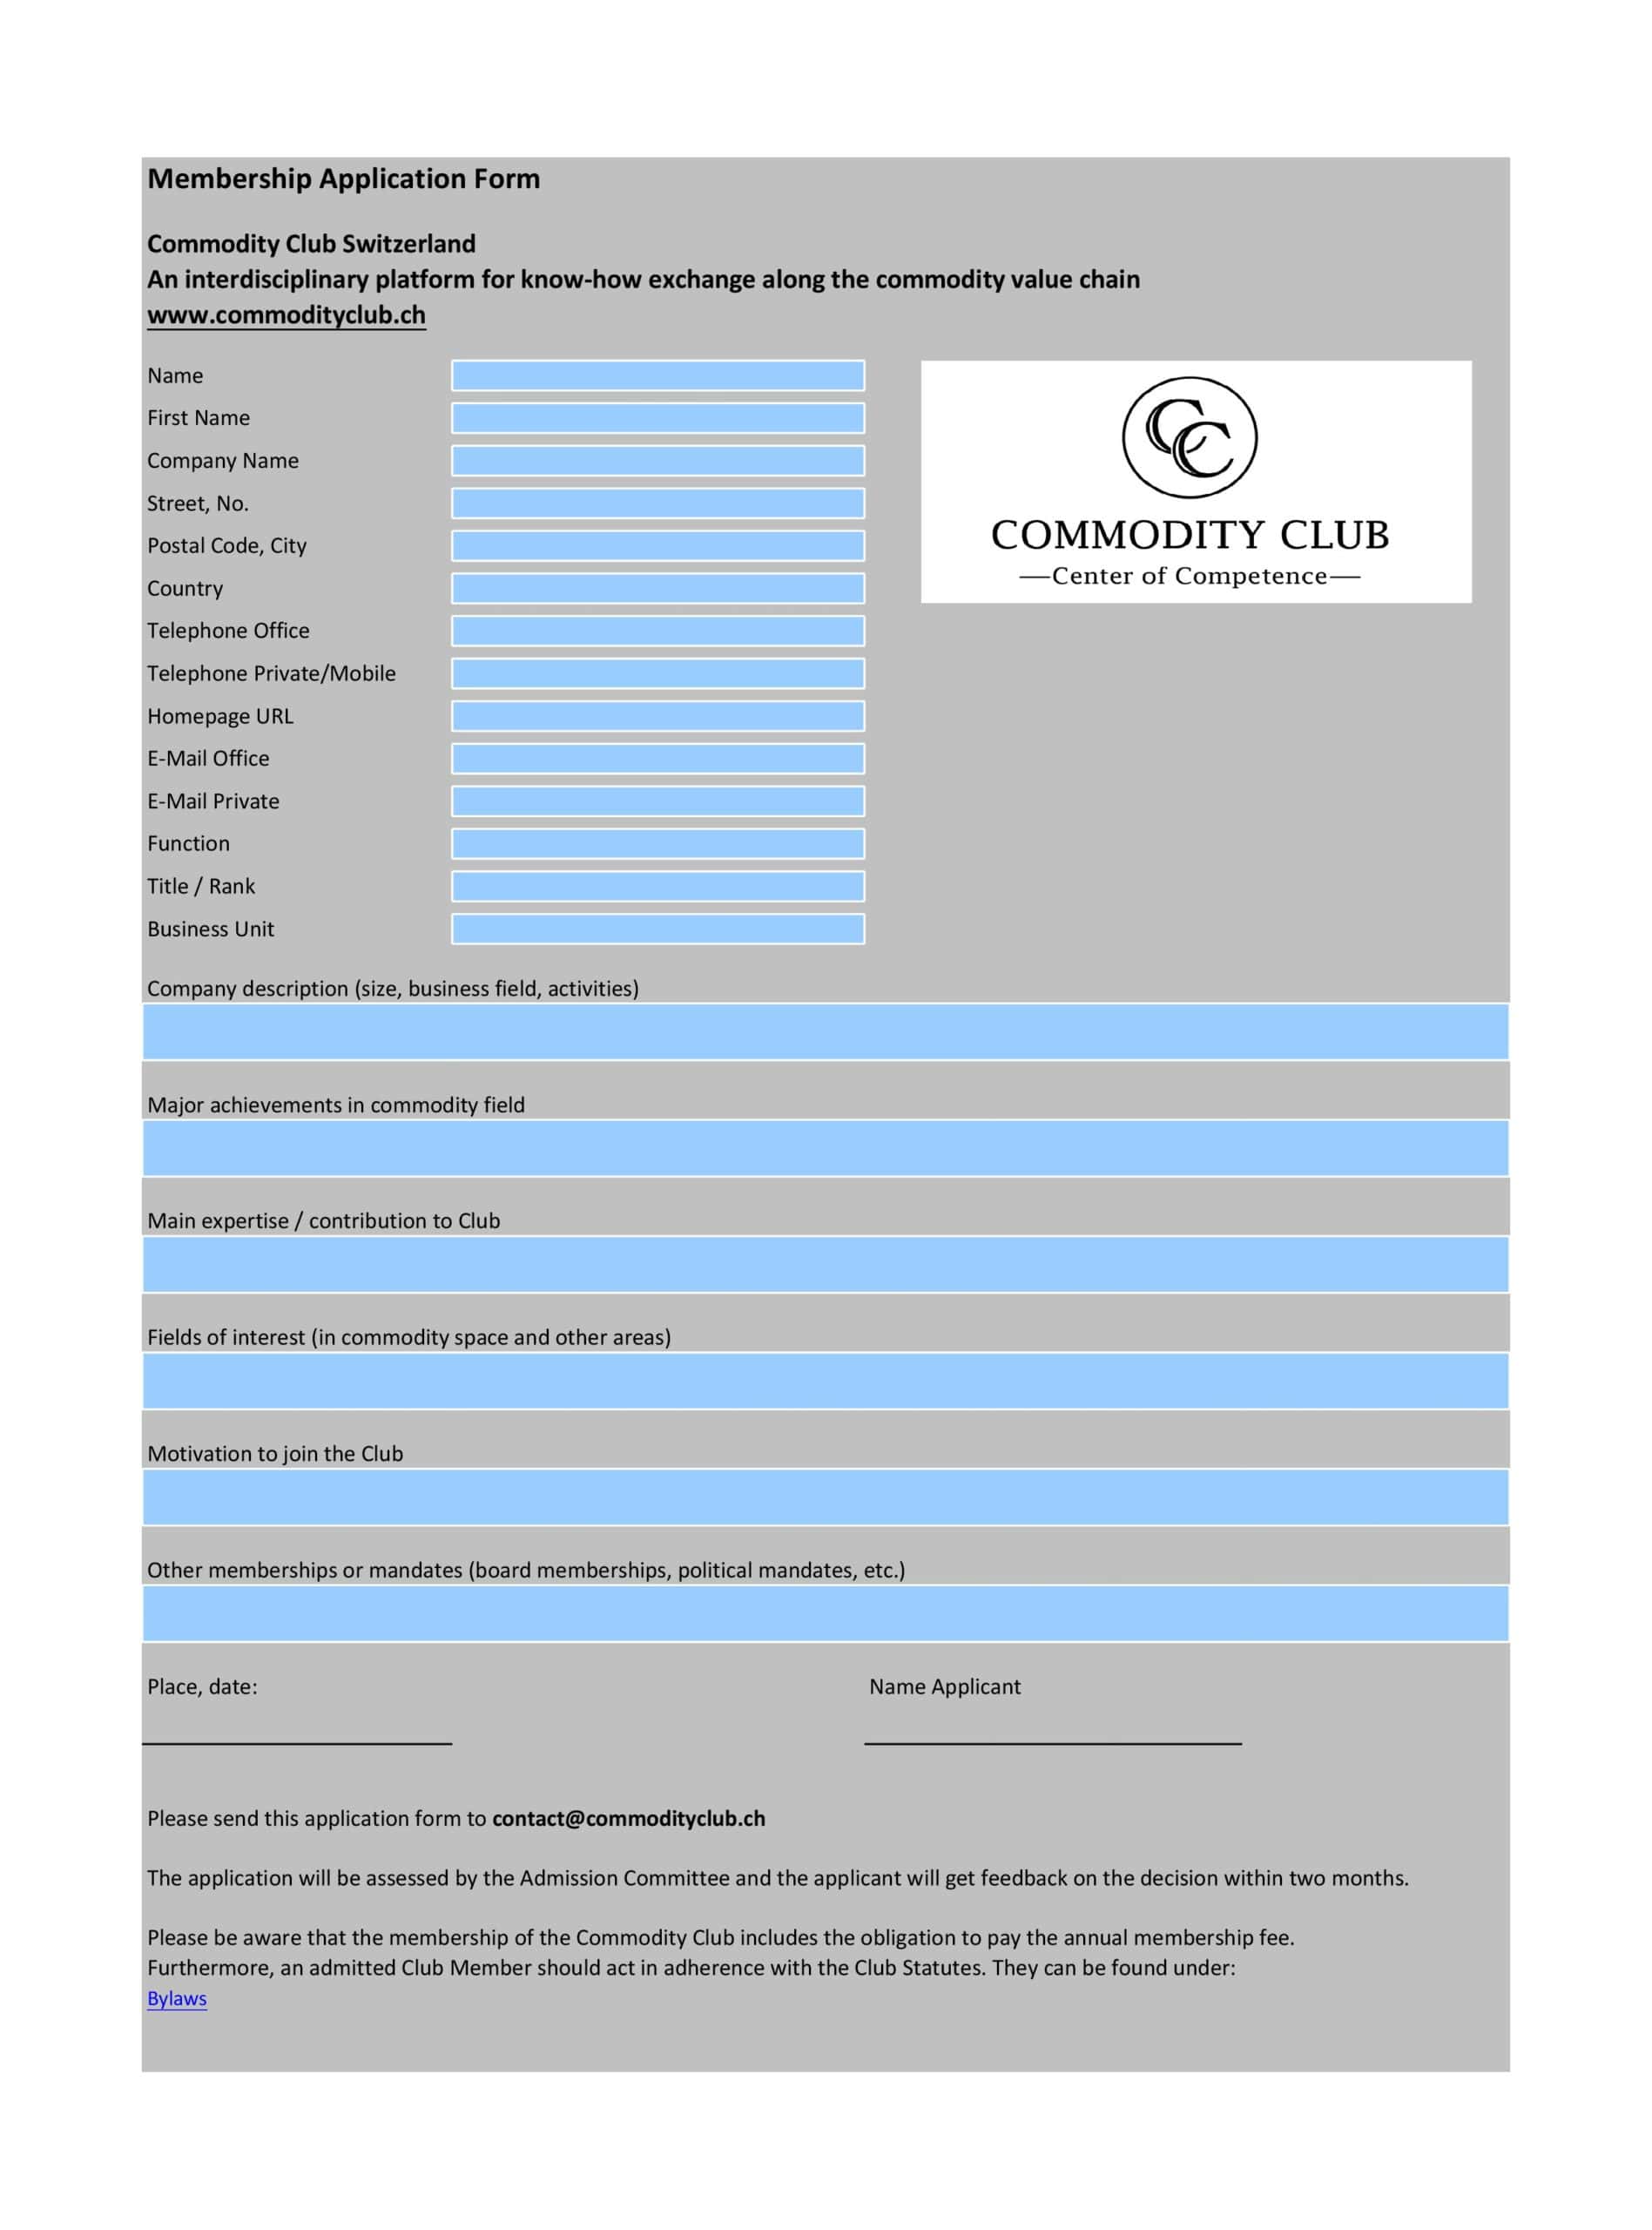 30 Membership Application Form Templates [Word, Excel, PDF